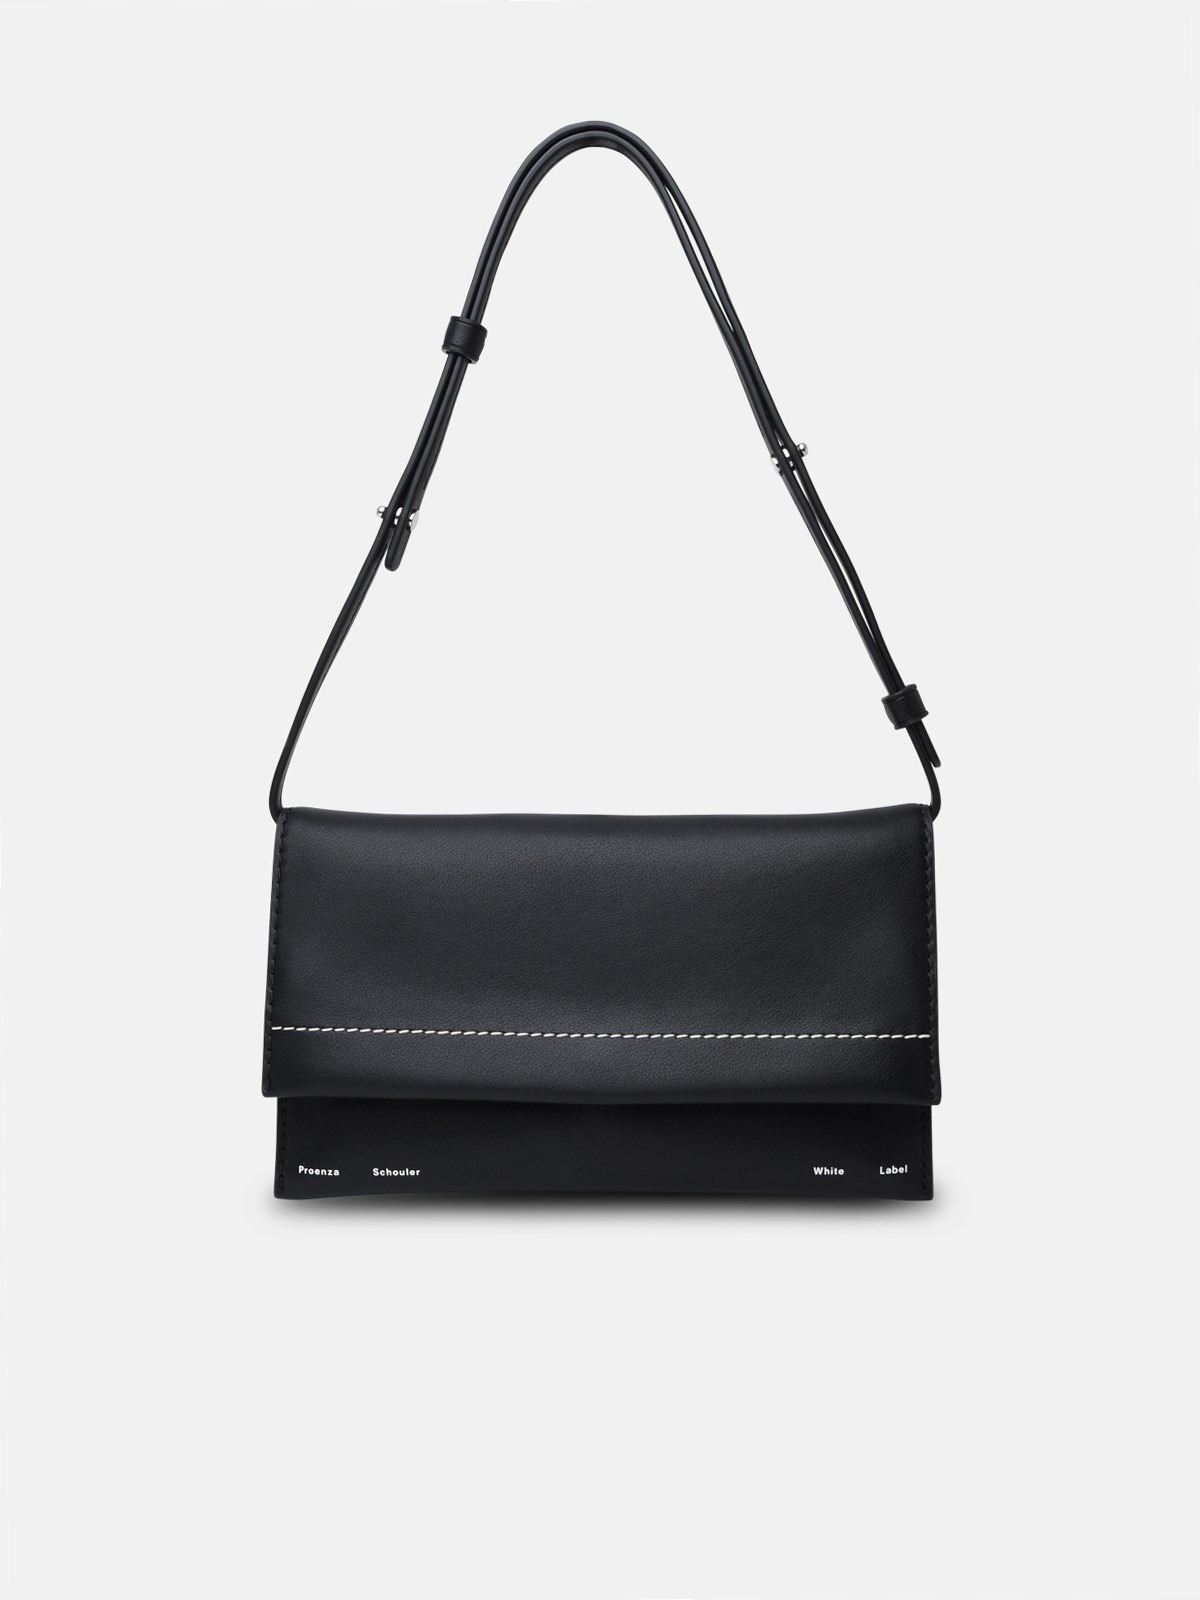 Proenza Schouler White Label Black Leather Accordion Flap Bag